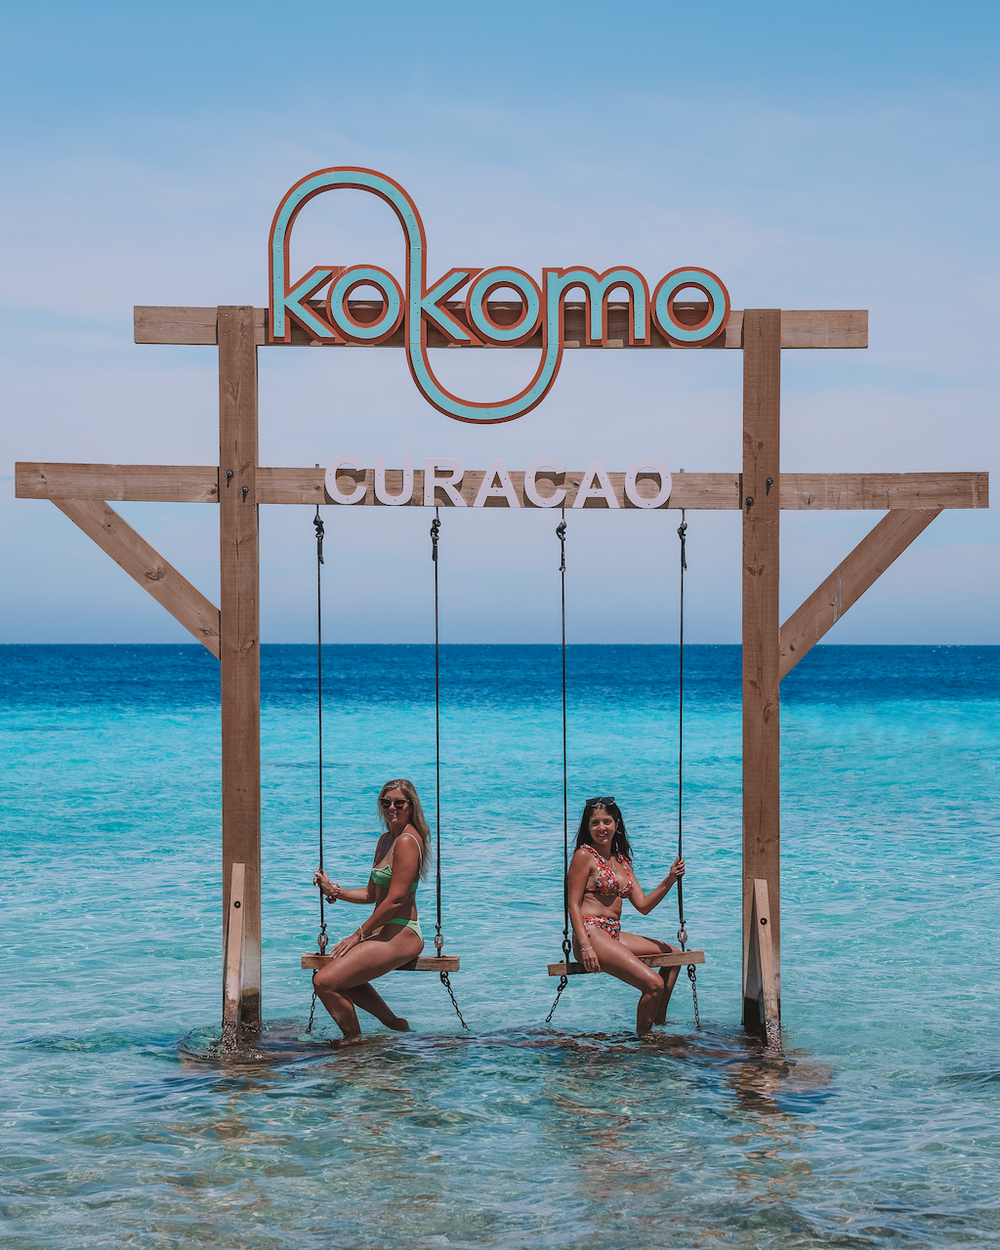 Two friends hanging out on the beach swings - Kokomo Beach - Curaçao - ABC Islands